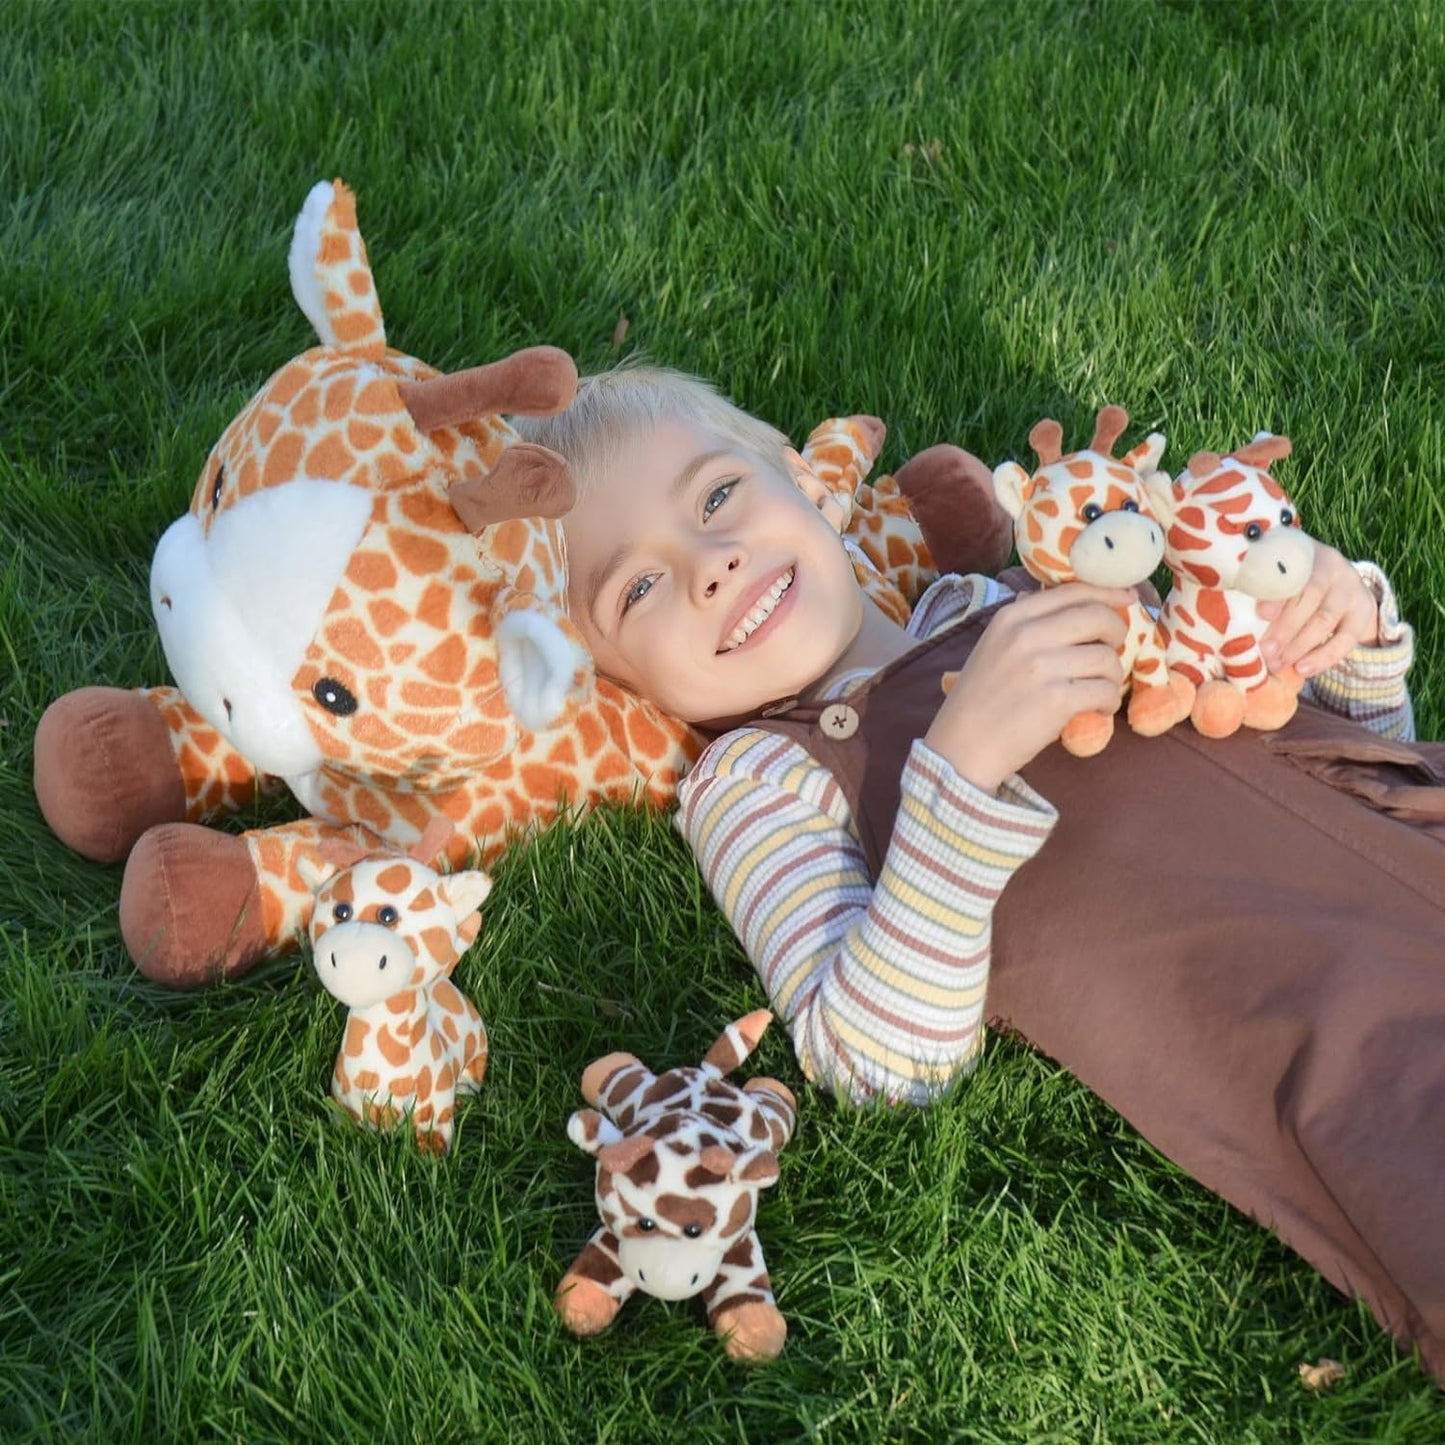 Giraffe Plush Toys Jungle Stuffed Animals, 22 Inches - MorisMos Jungle Plush toys Forest Stuffed Animals